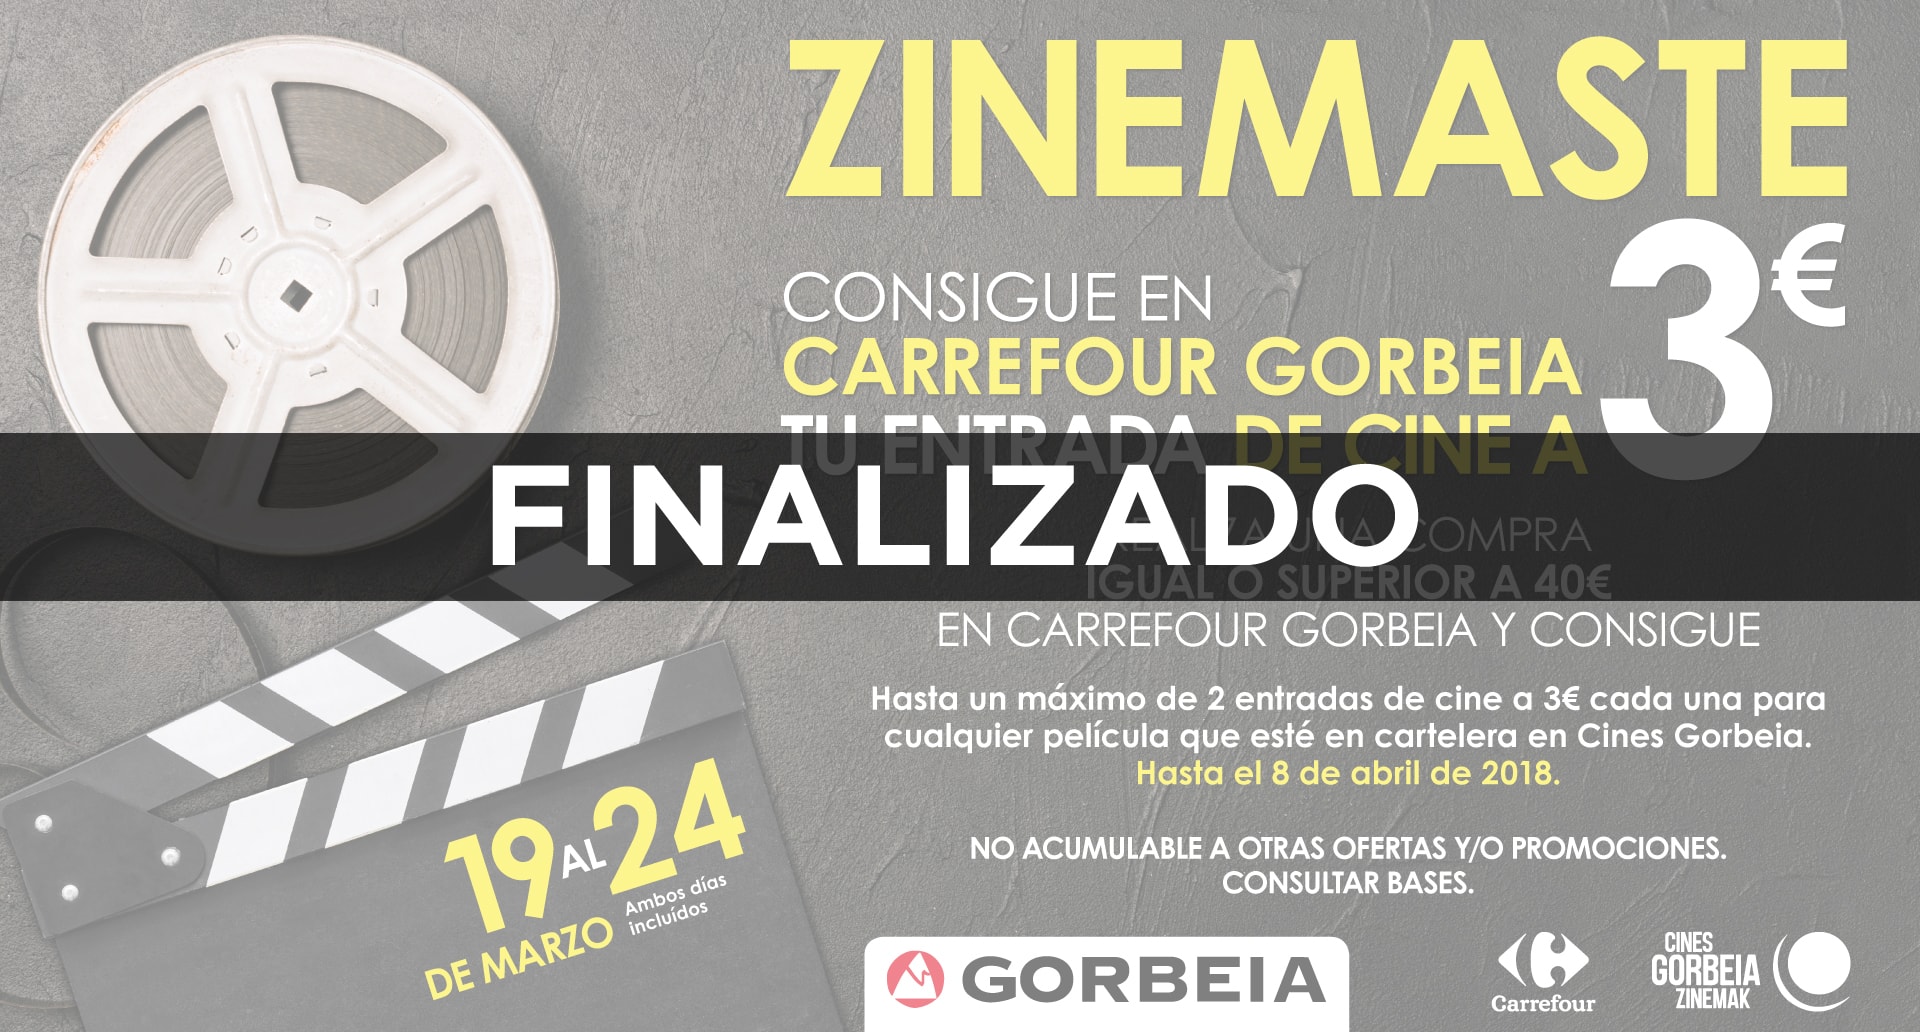 Bases de la promoción Zinemaste: Consigue tu entrada de cine en Carrefour Gorbeia a 3 euros